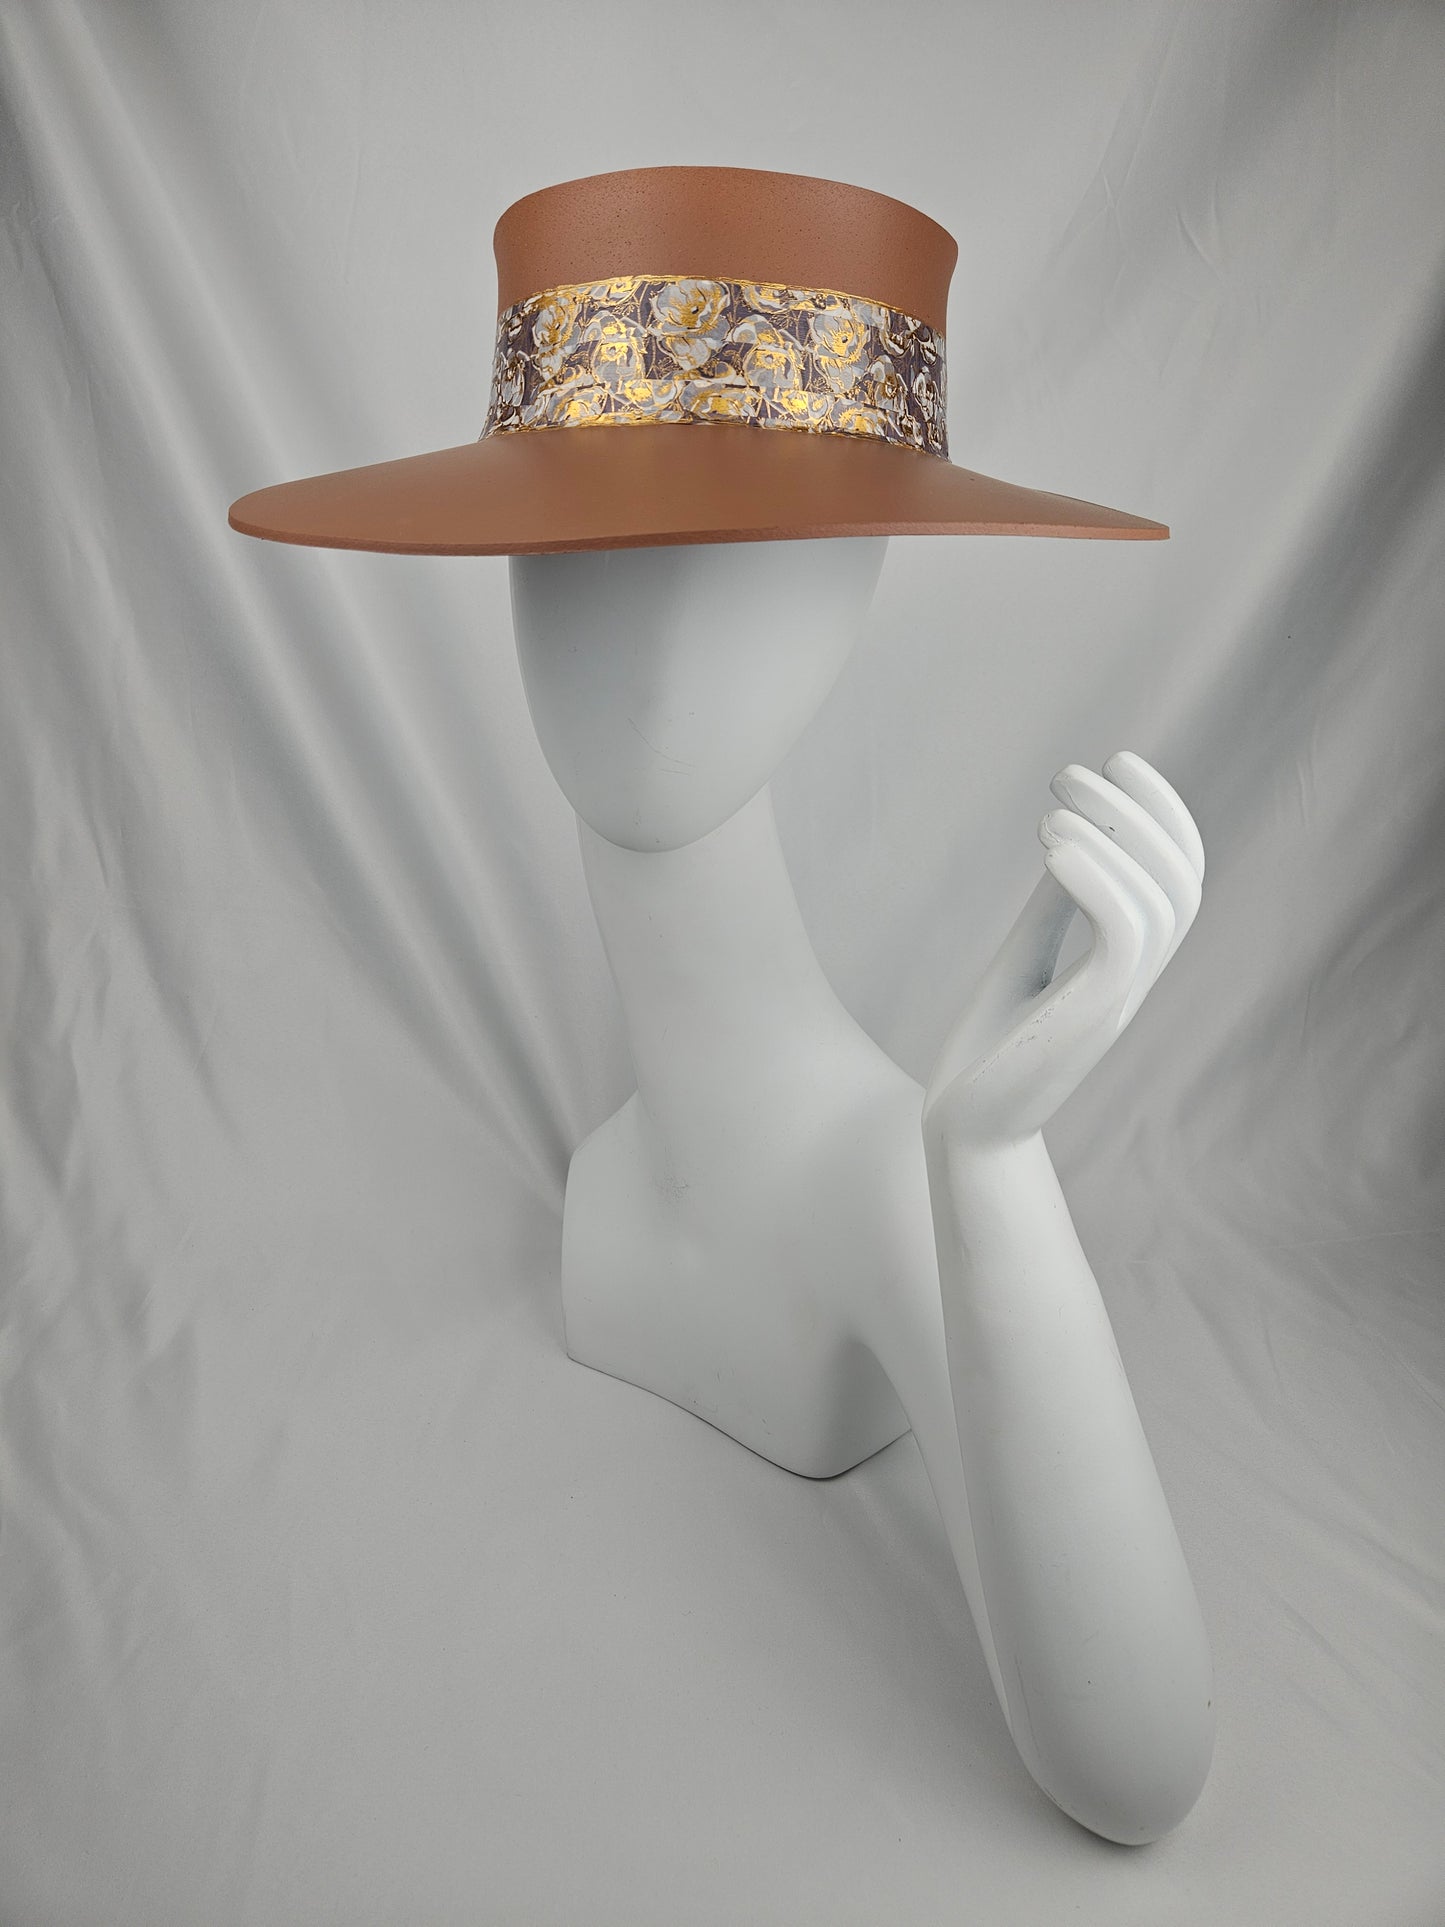 Tall Caramel Brown Audrey Sun Visor Hat with Gray and Gold Floral Band: UV Resistant, Walks, Brunch, Tea, Golf, Wedding, Church, No Headache, Easter, Pool, Beach, Big Brim